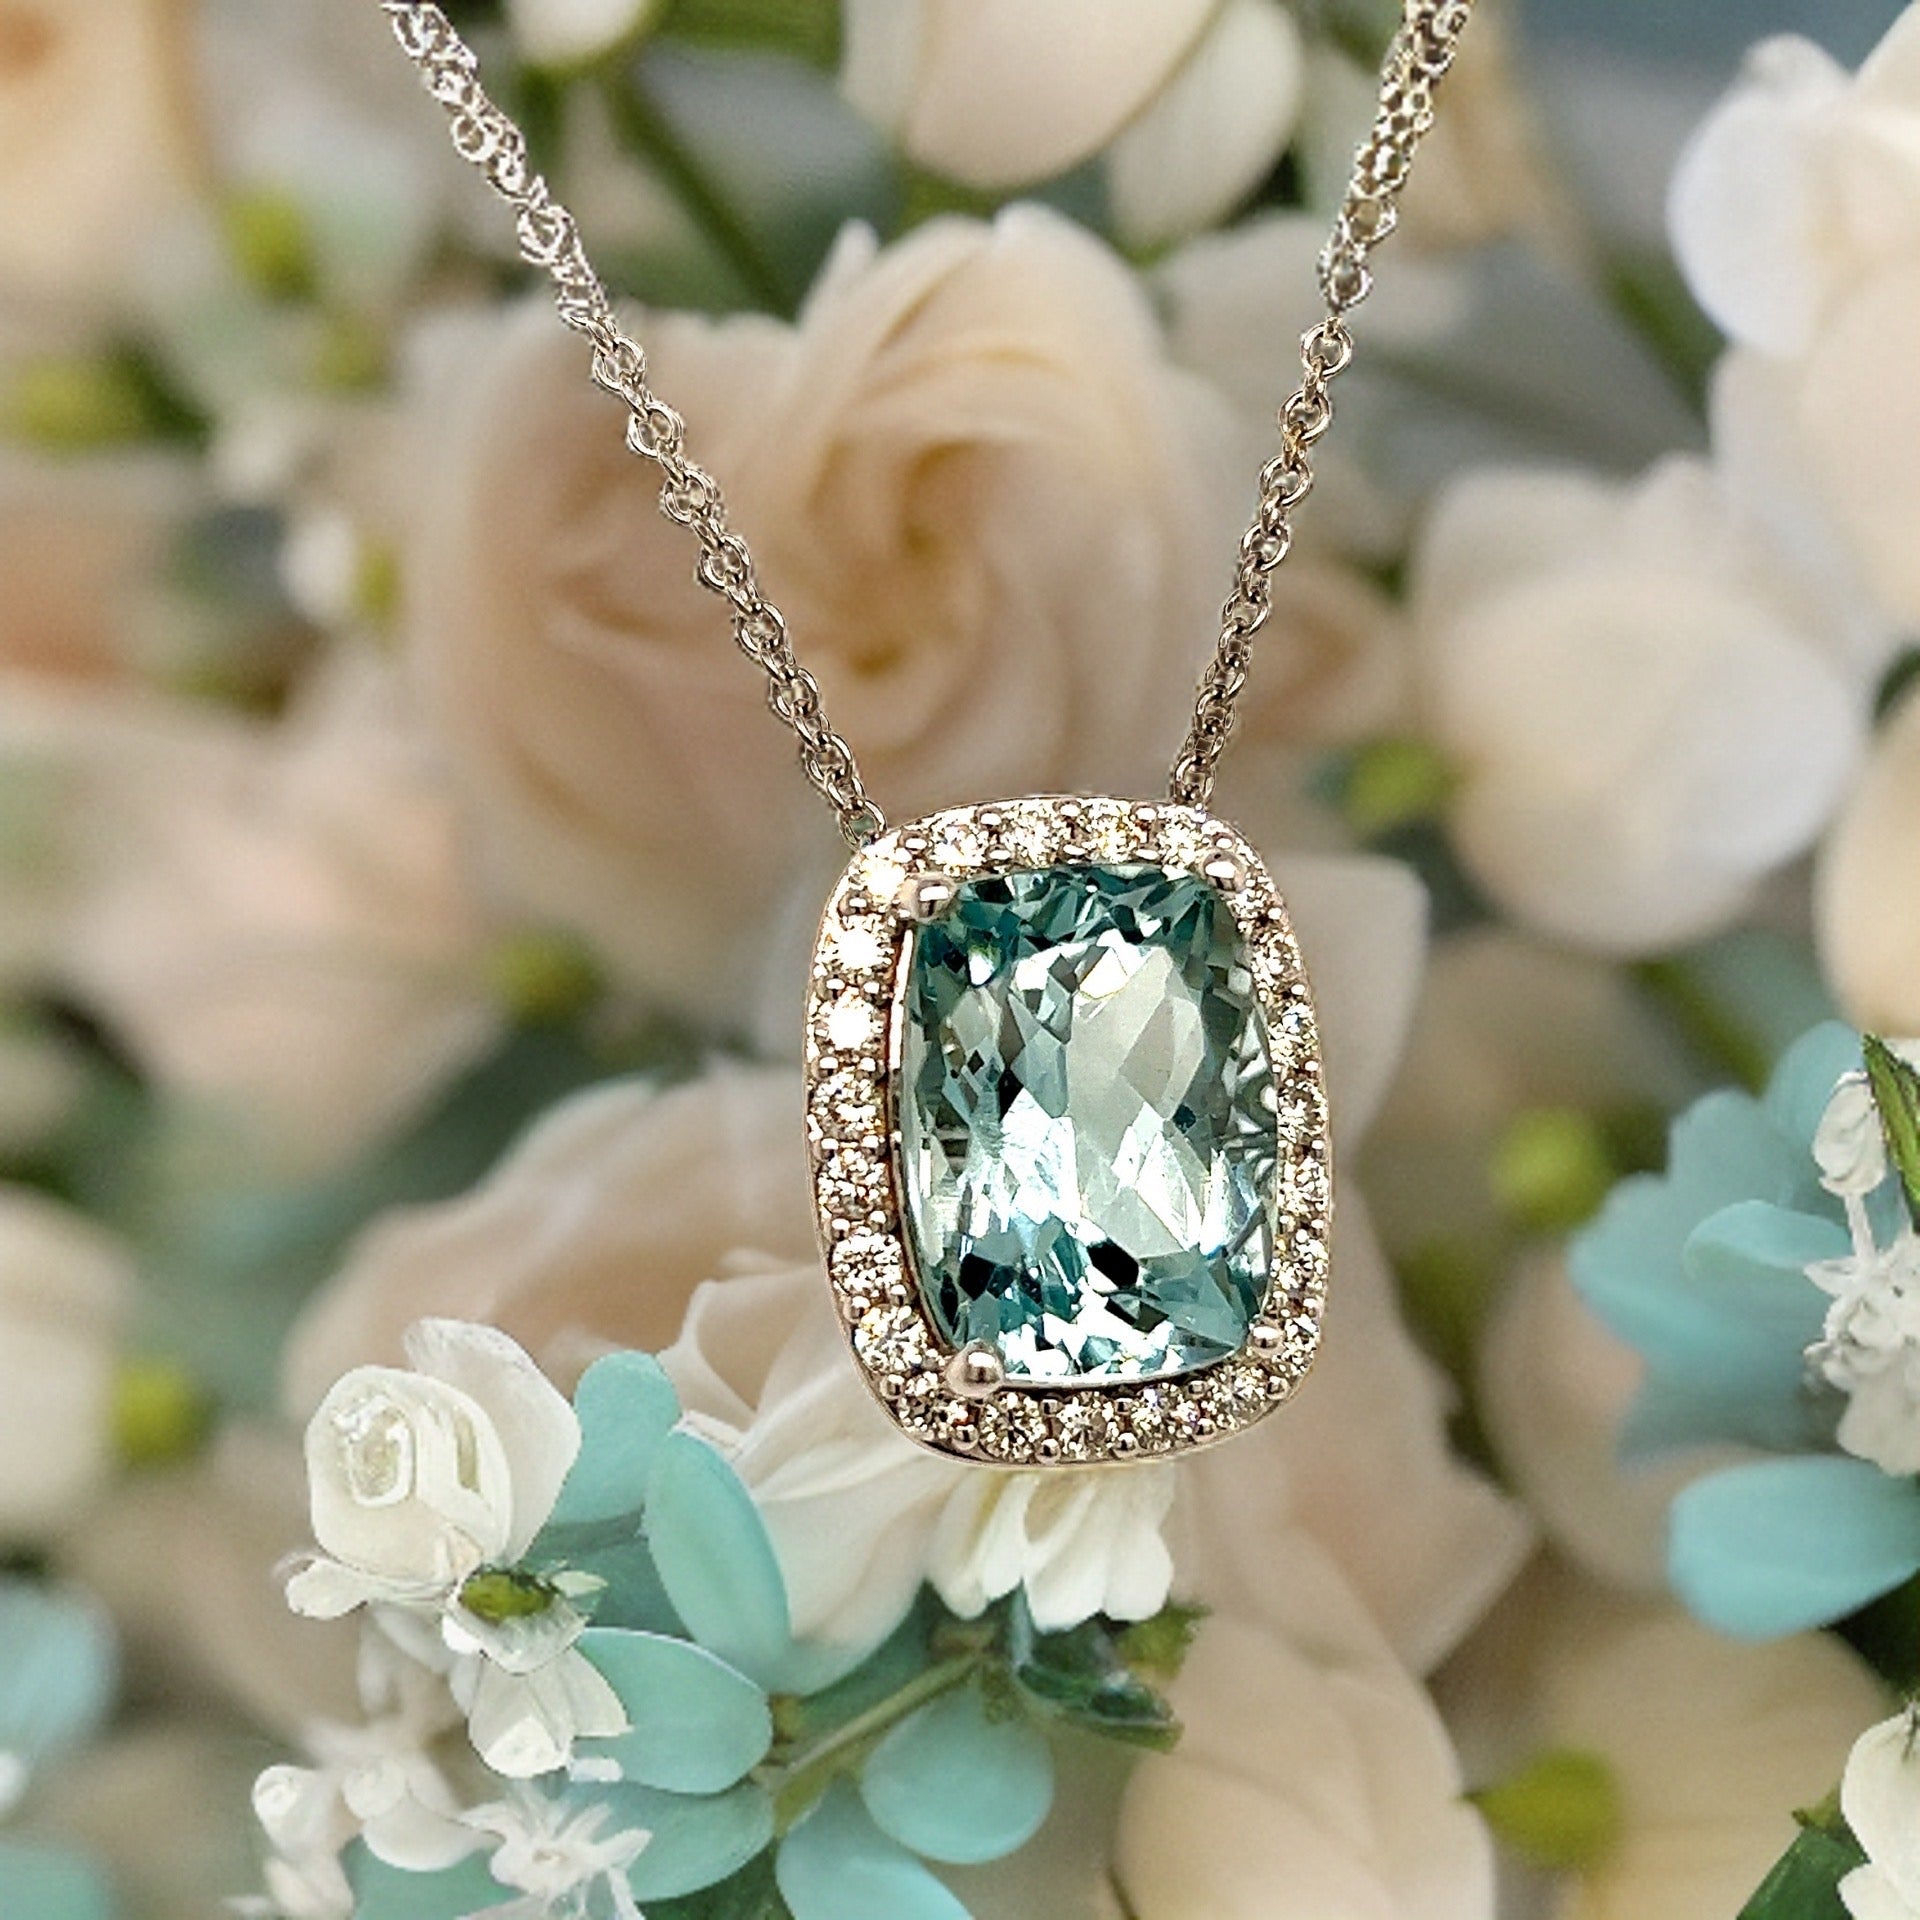 Diamond Aquamarine Pendant Necklace 14k Gold 17" 8.37 TCW Certified $5,950 213255 - Certified Fine Jewelry